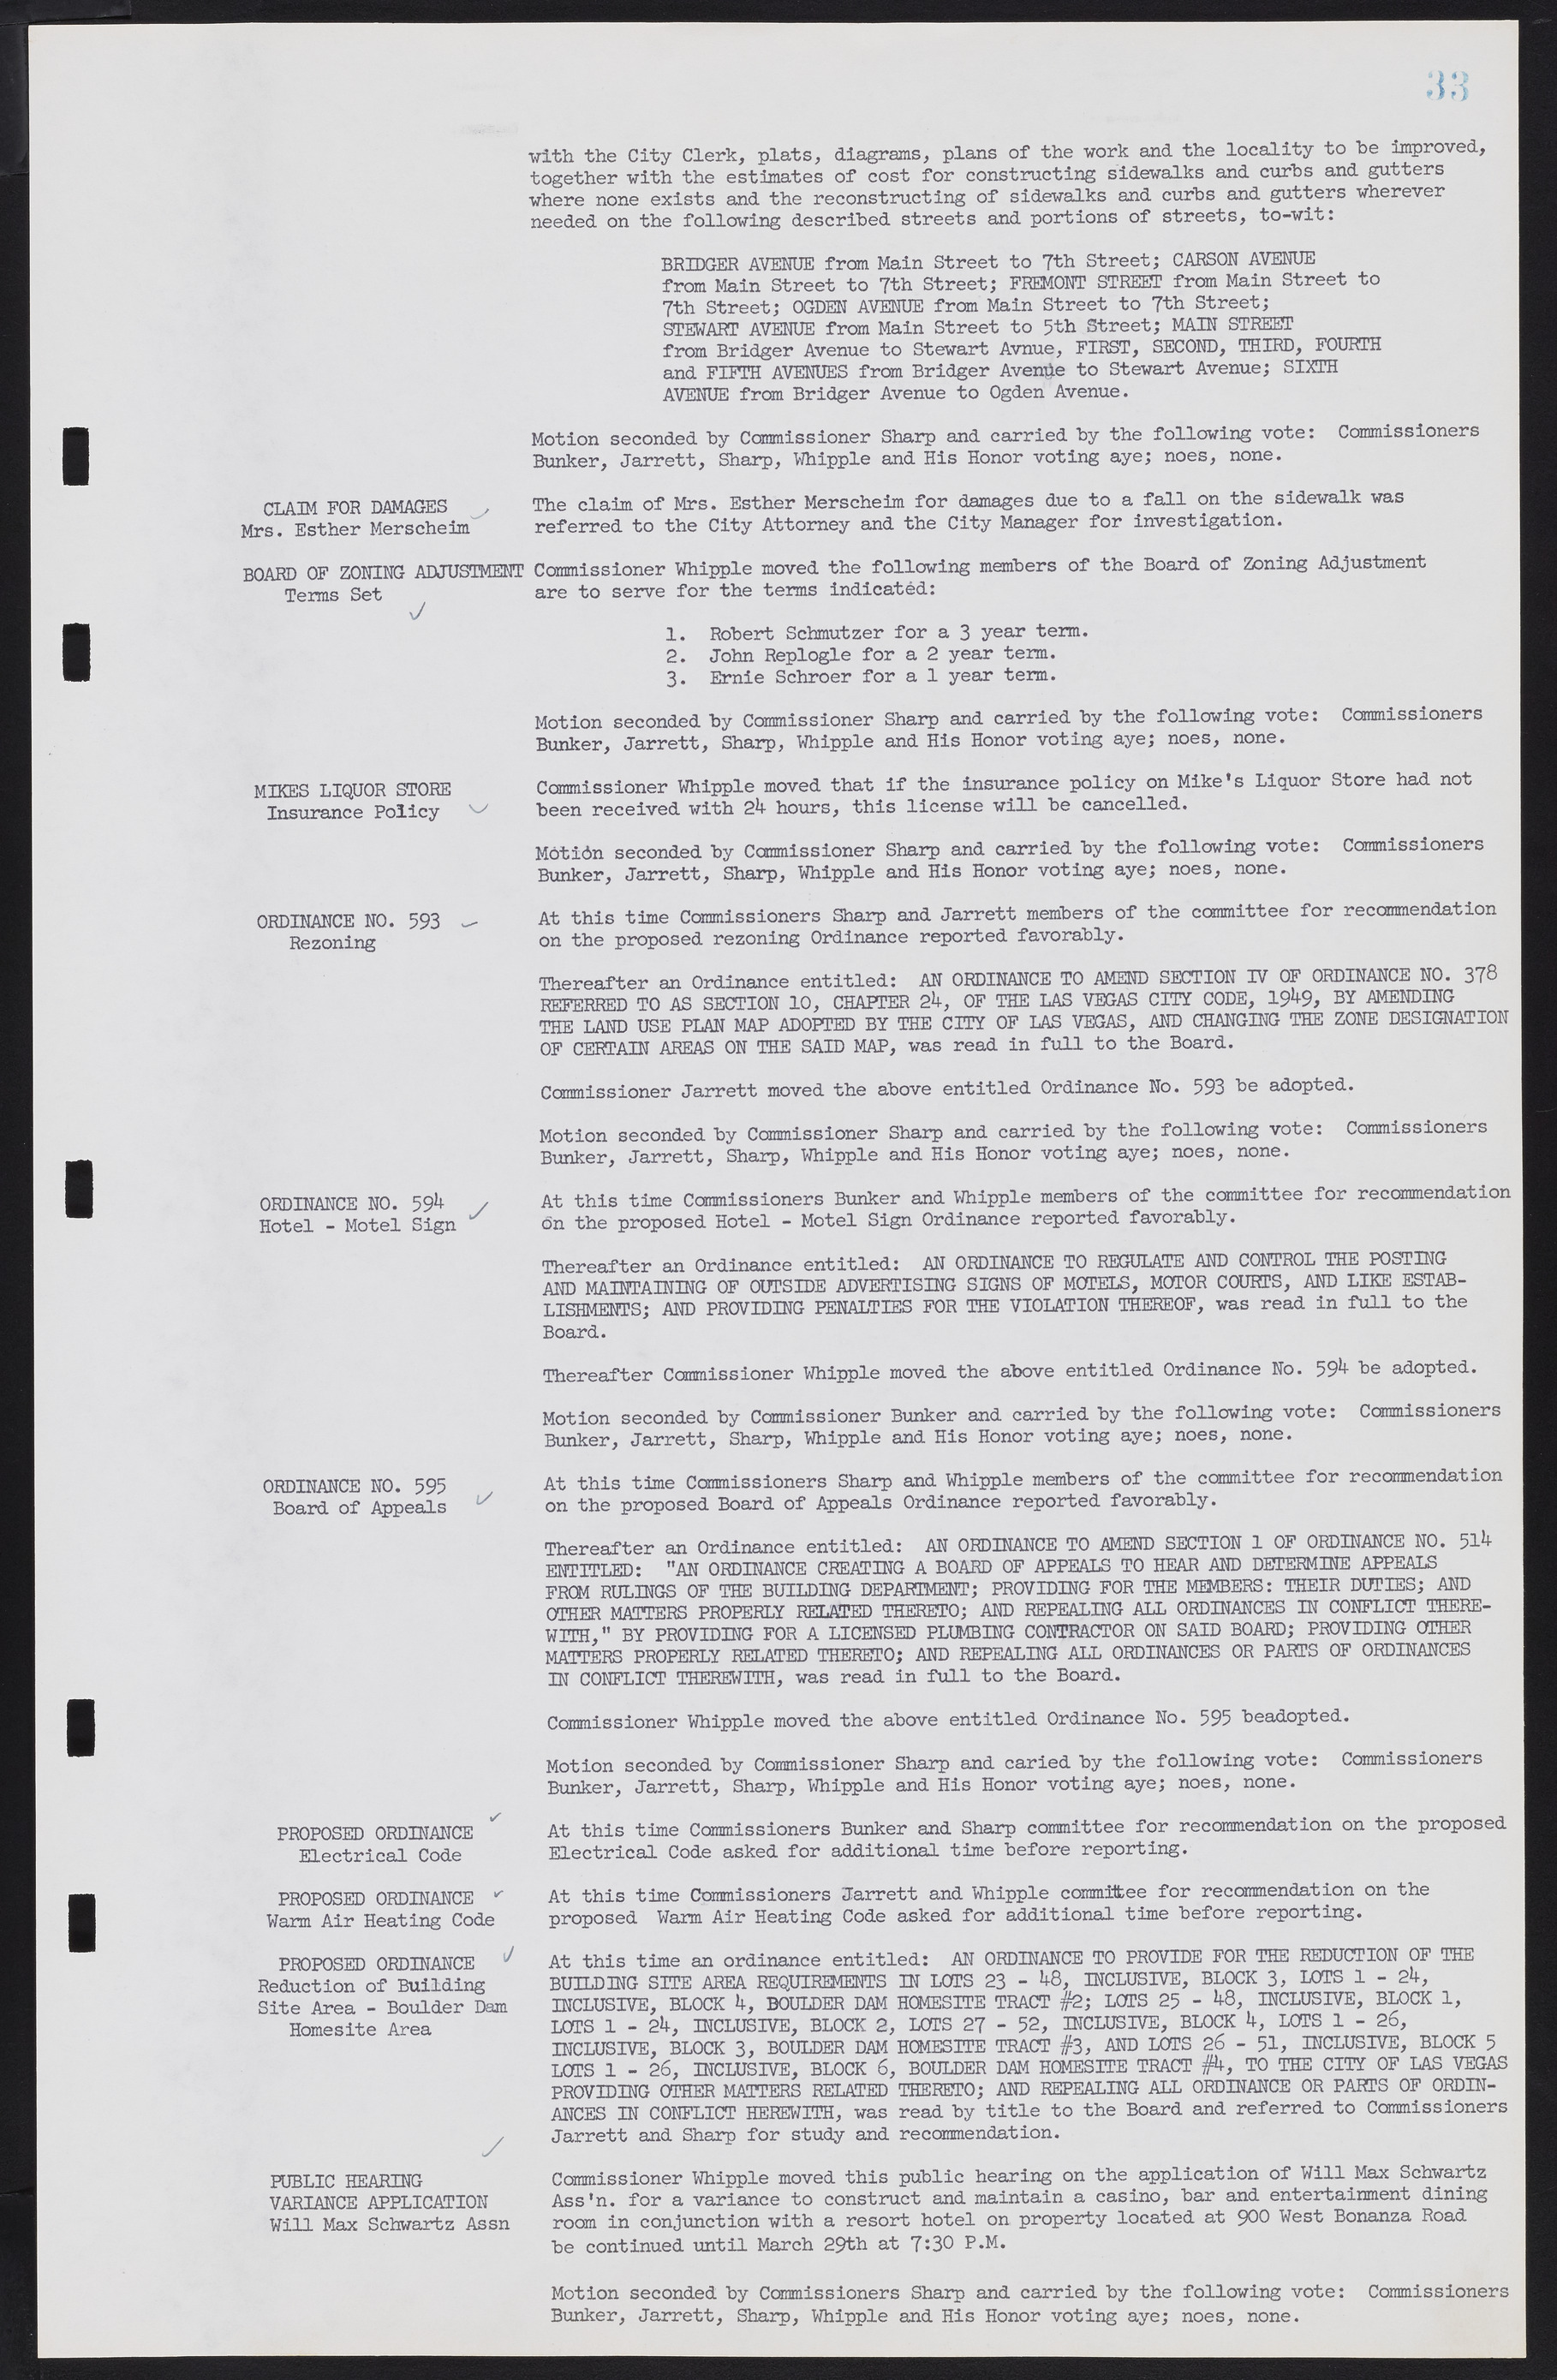 Las Vegas City Commission Minutes, February 17, 1954 to September 21, 1955, lvc000009-37